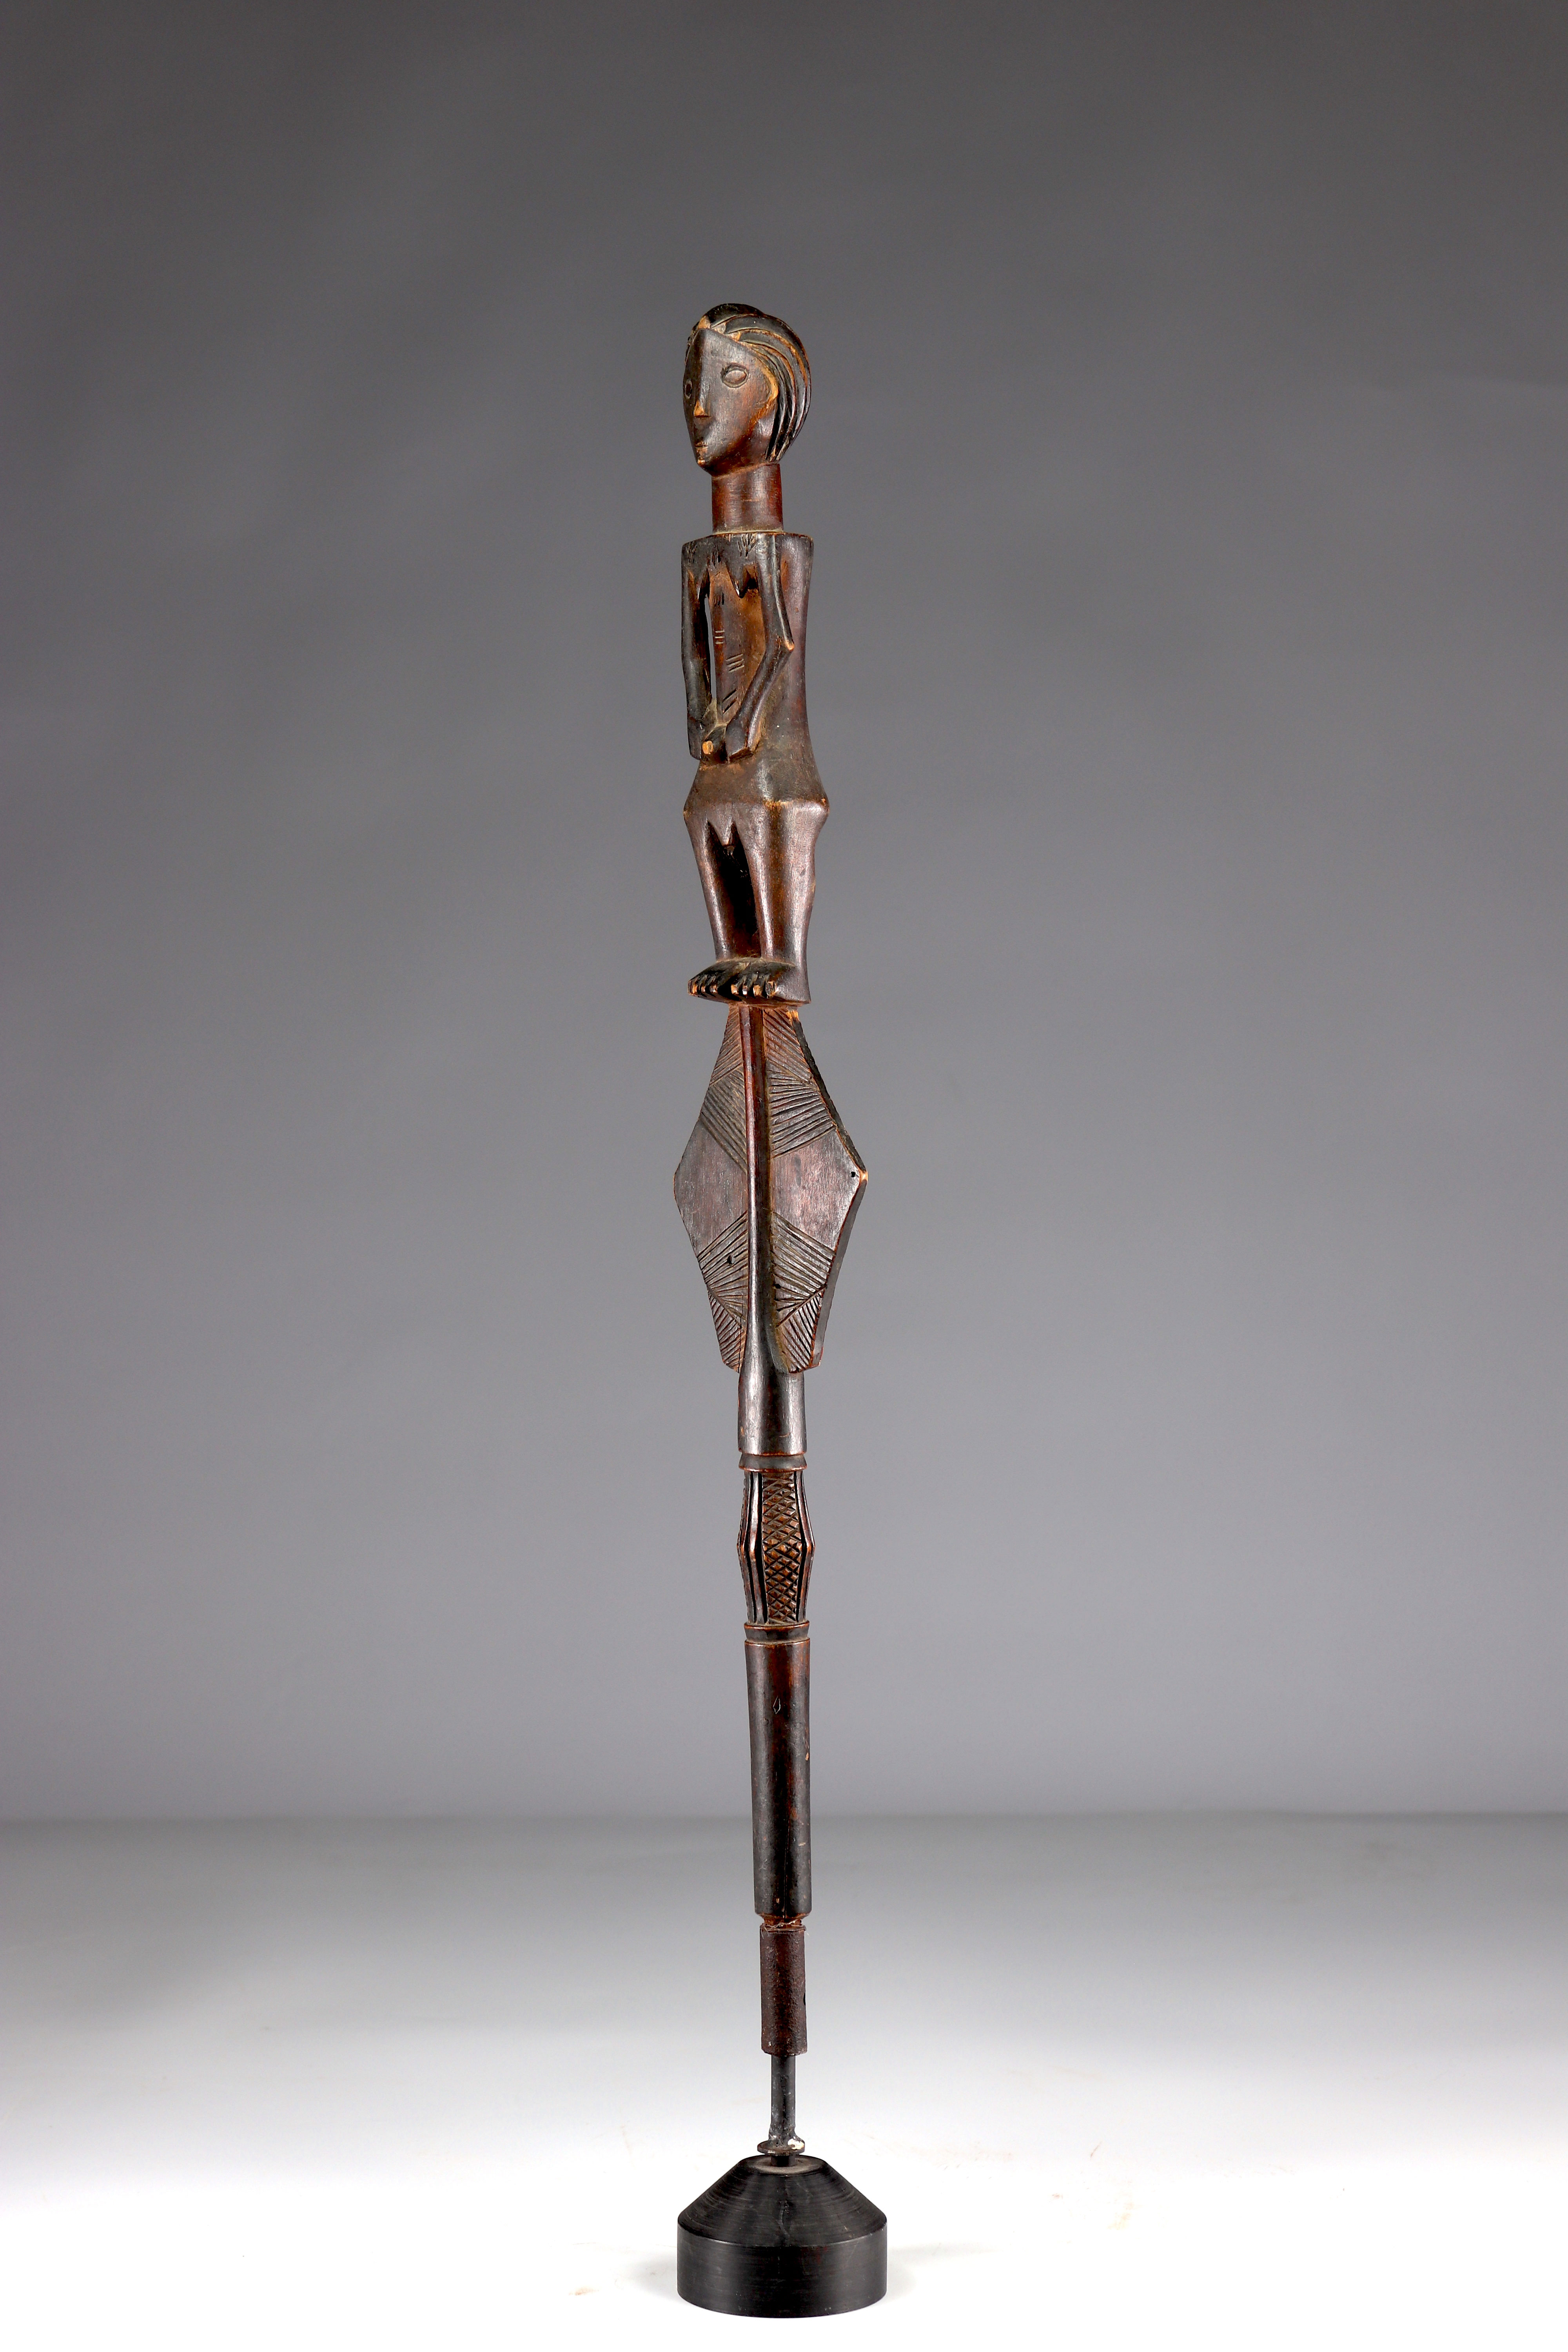 Beautiful and elegant Luba scepter top - beautiful original patina - private collection Belgium - Image 3 of 5